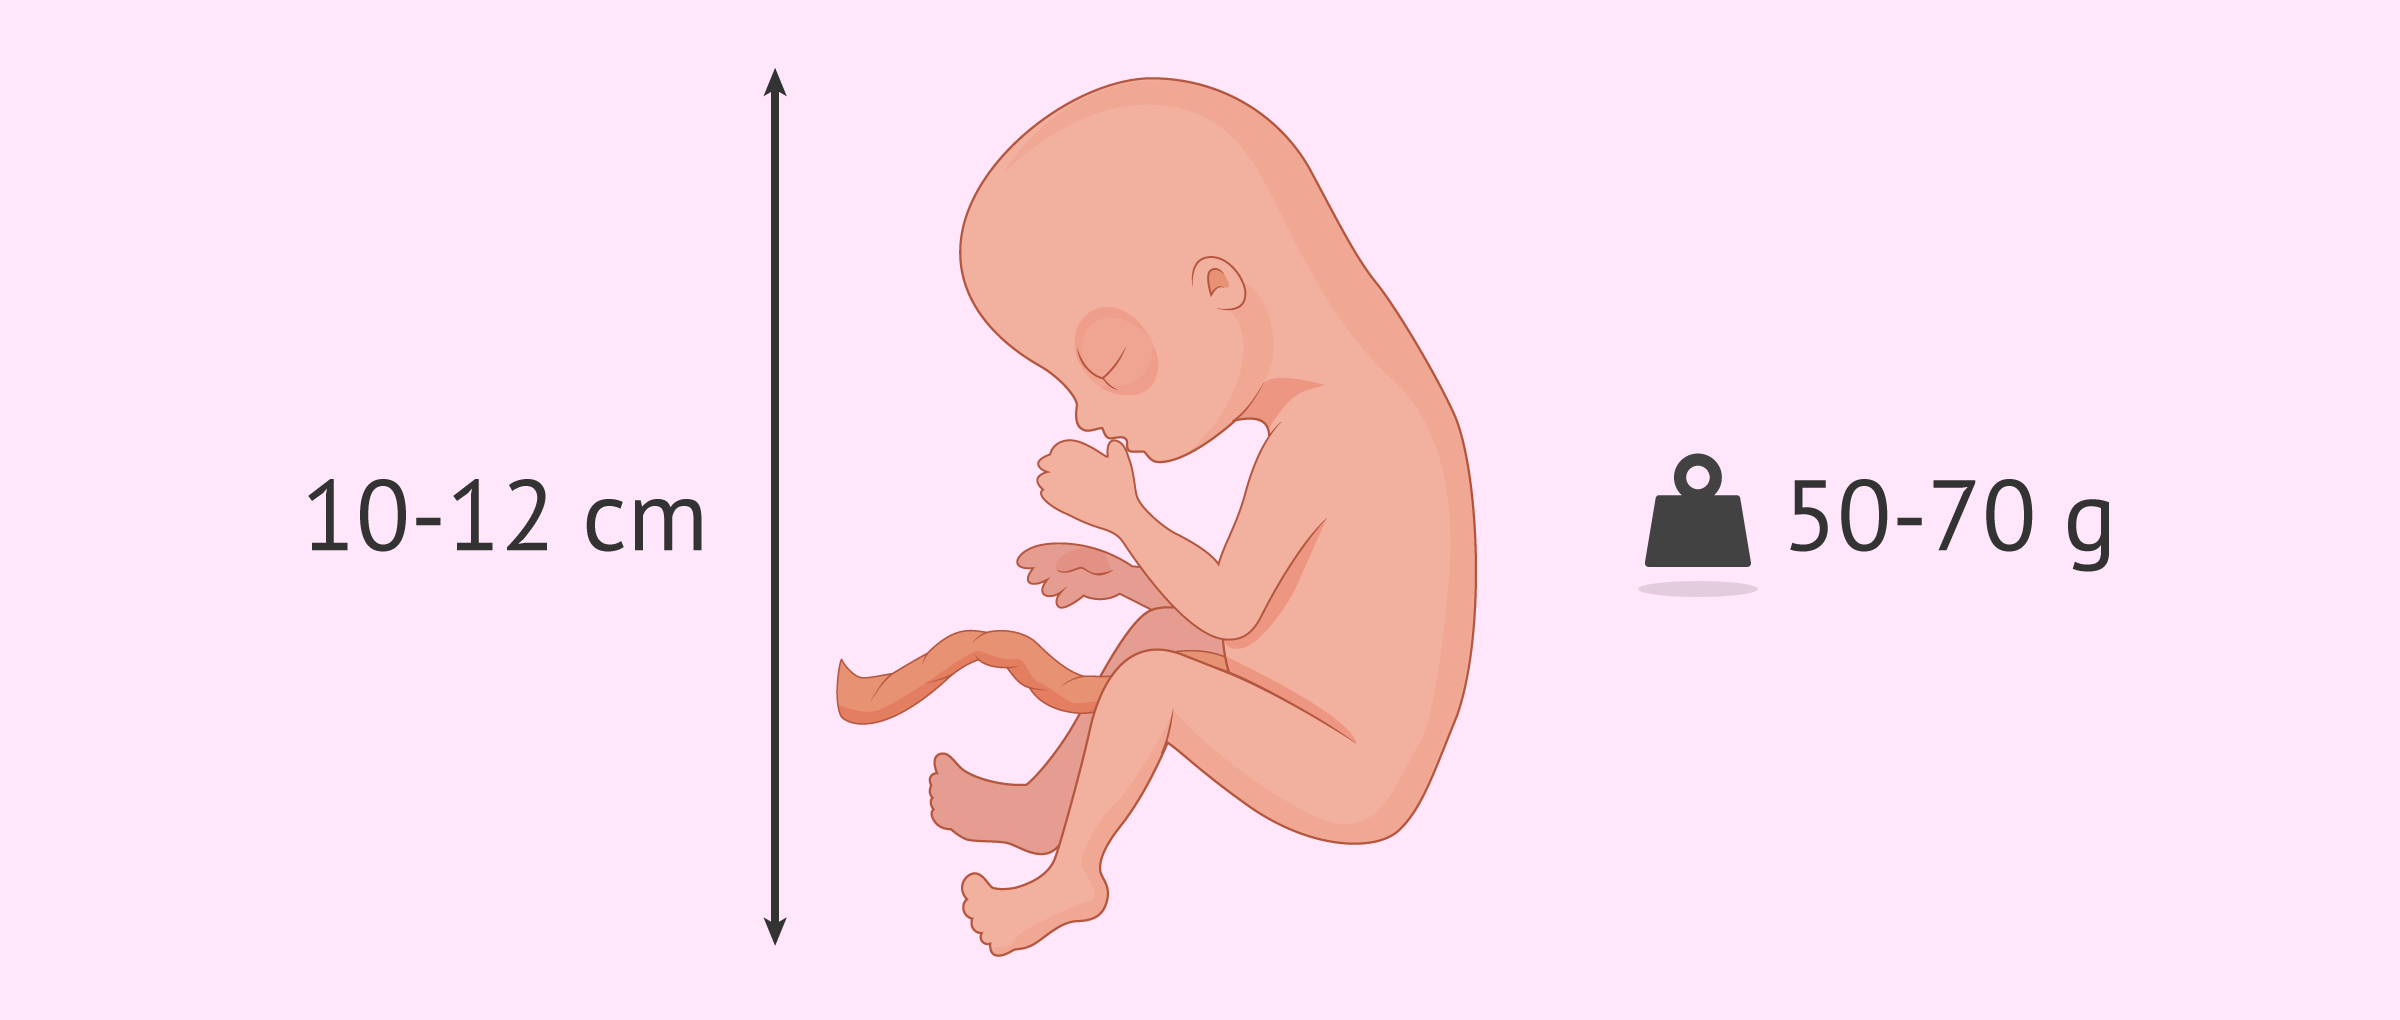 Fetal development at 15 weeks